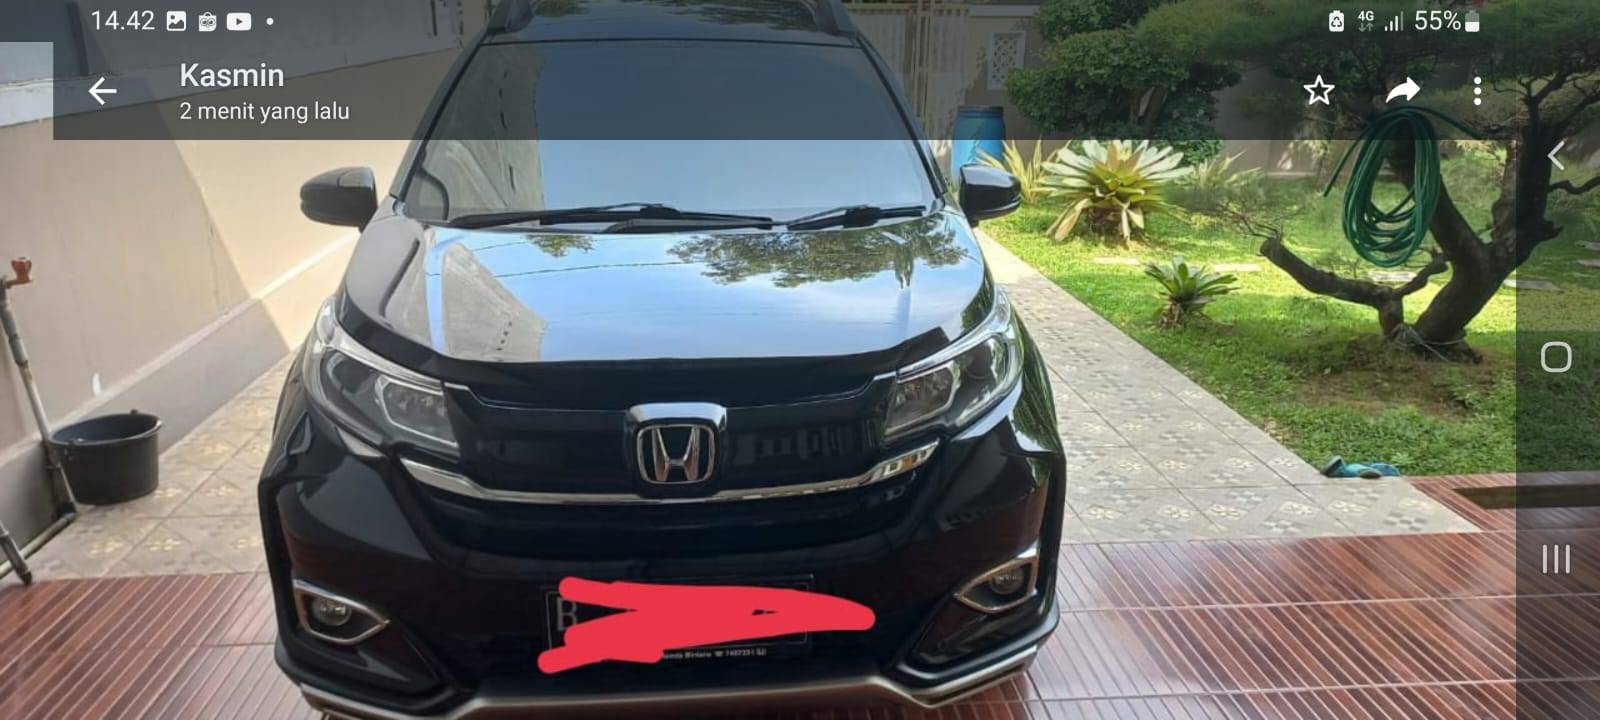 2019 Honda BRV Bekas